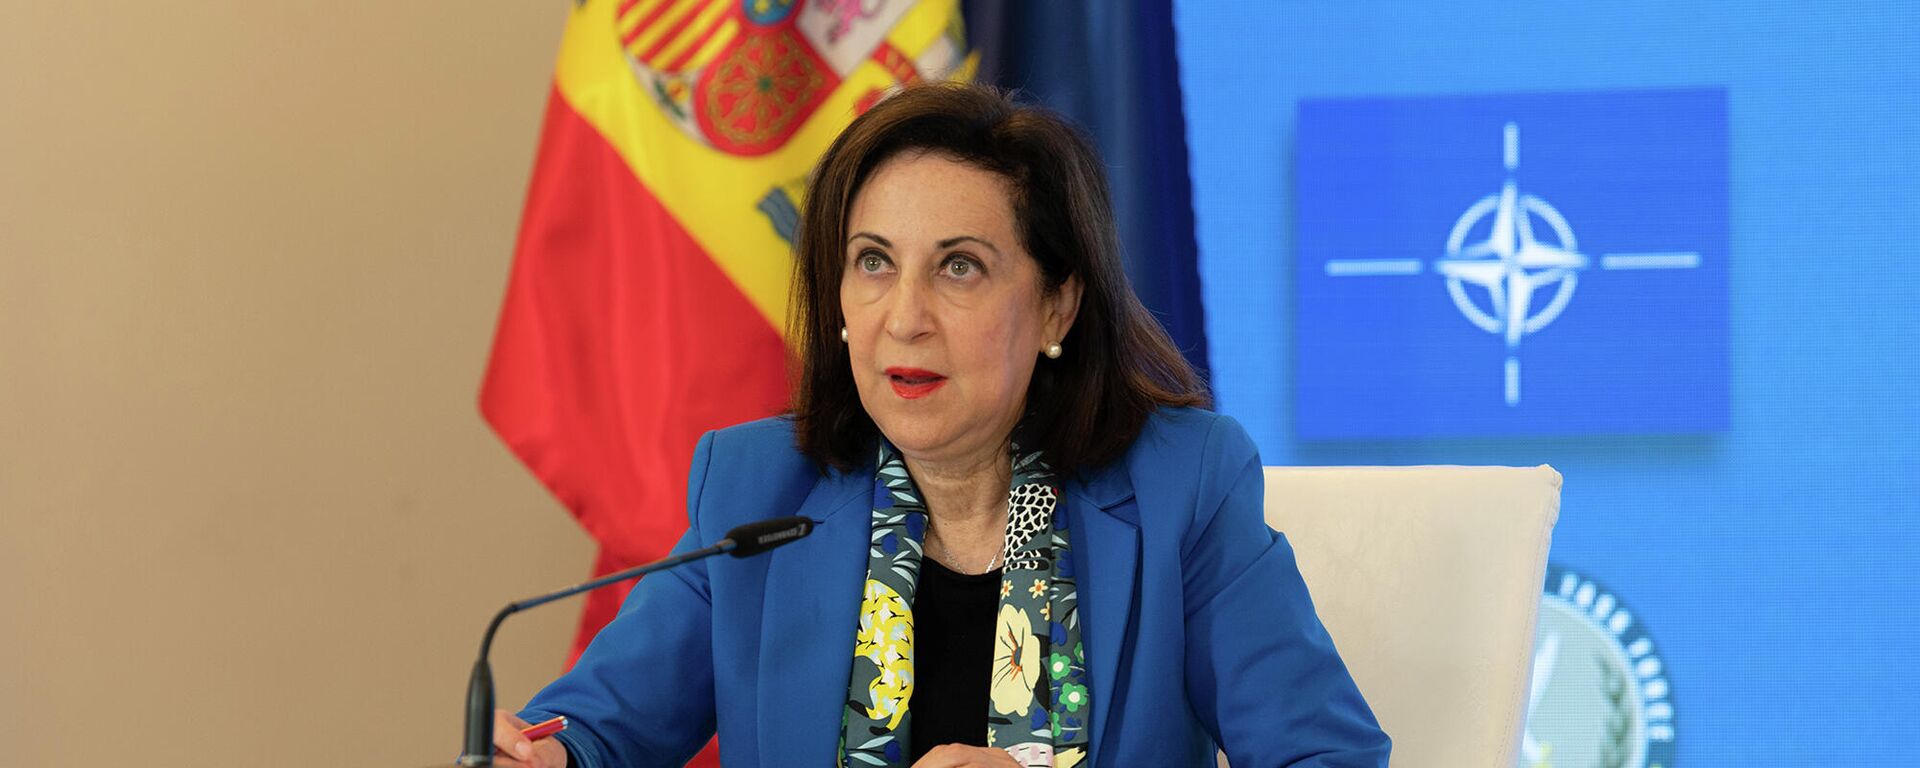 Margarita Robles, la ministra de Defensa de España - Sputnik Mundo, 1920, 27.01.2022